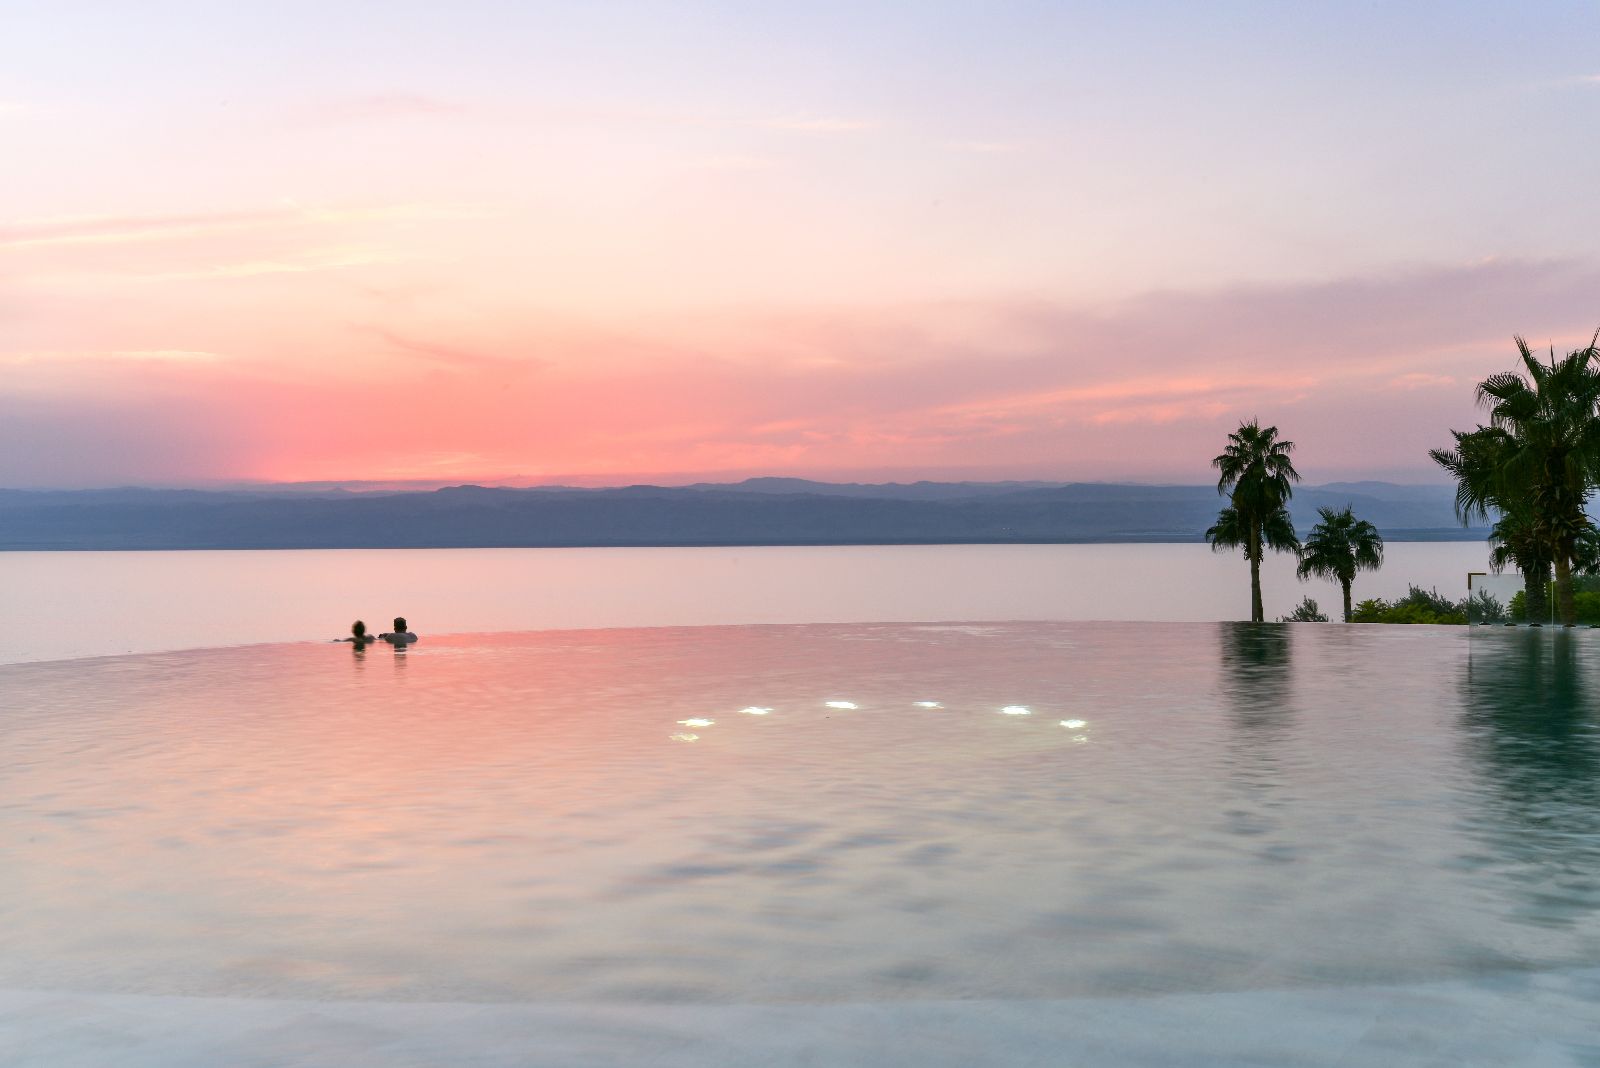 The infinity pool at sunset at the Kempinski Ishtar Dead Sea in Jordan